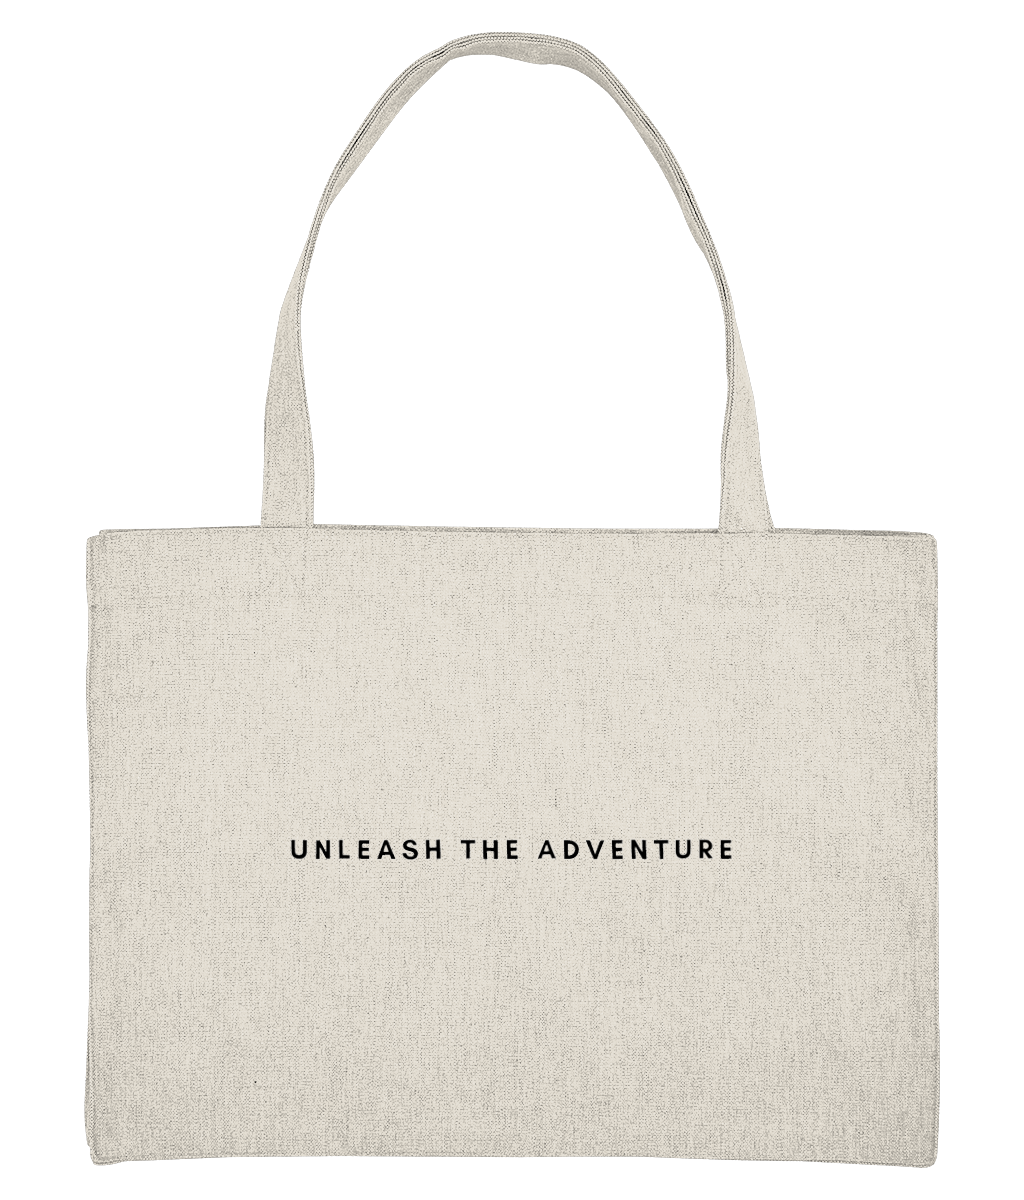 Unleash the adventure, bag